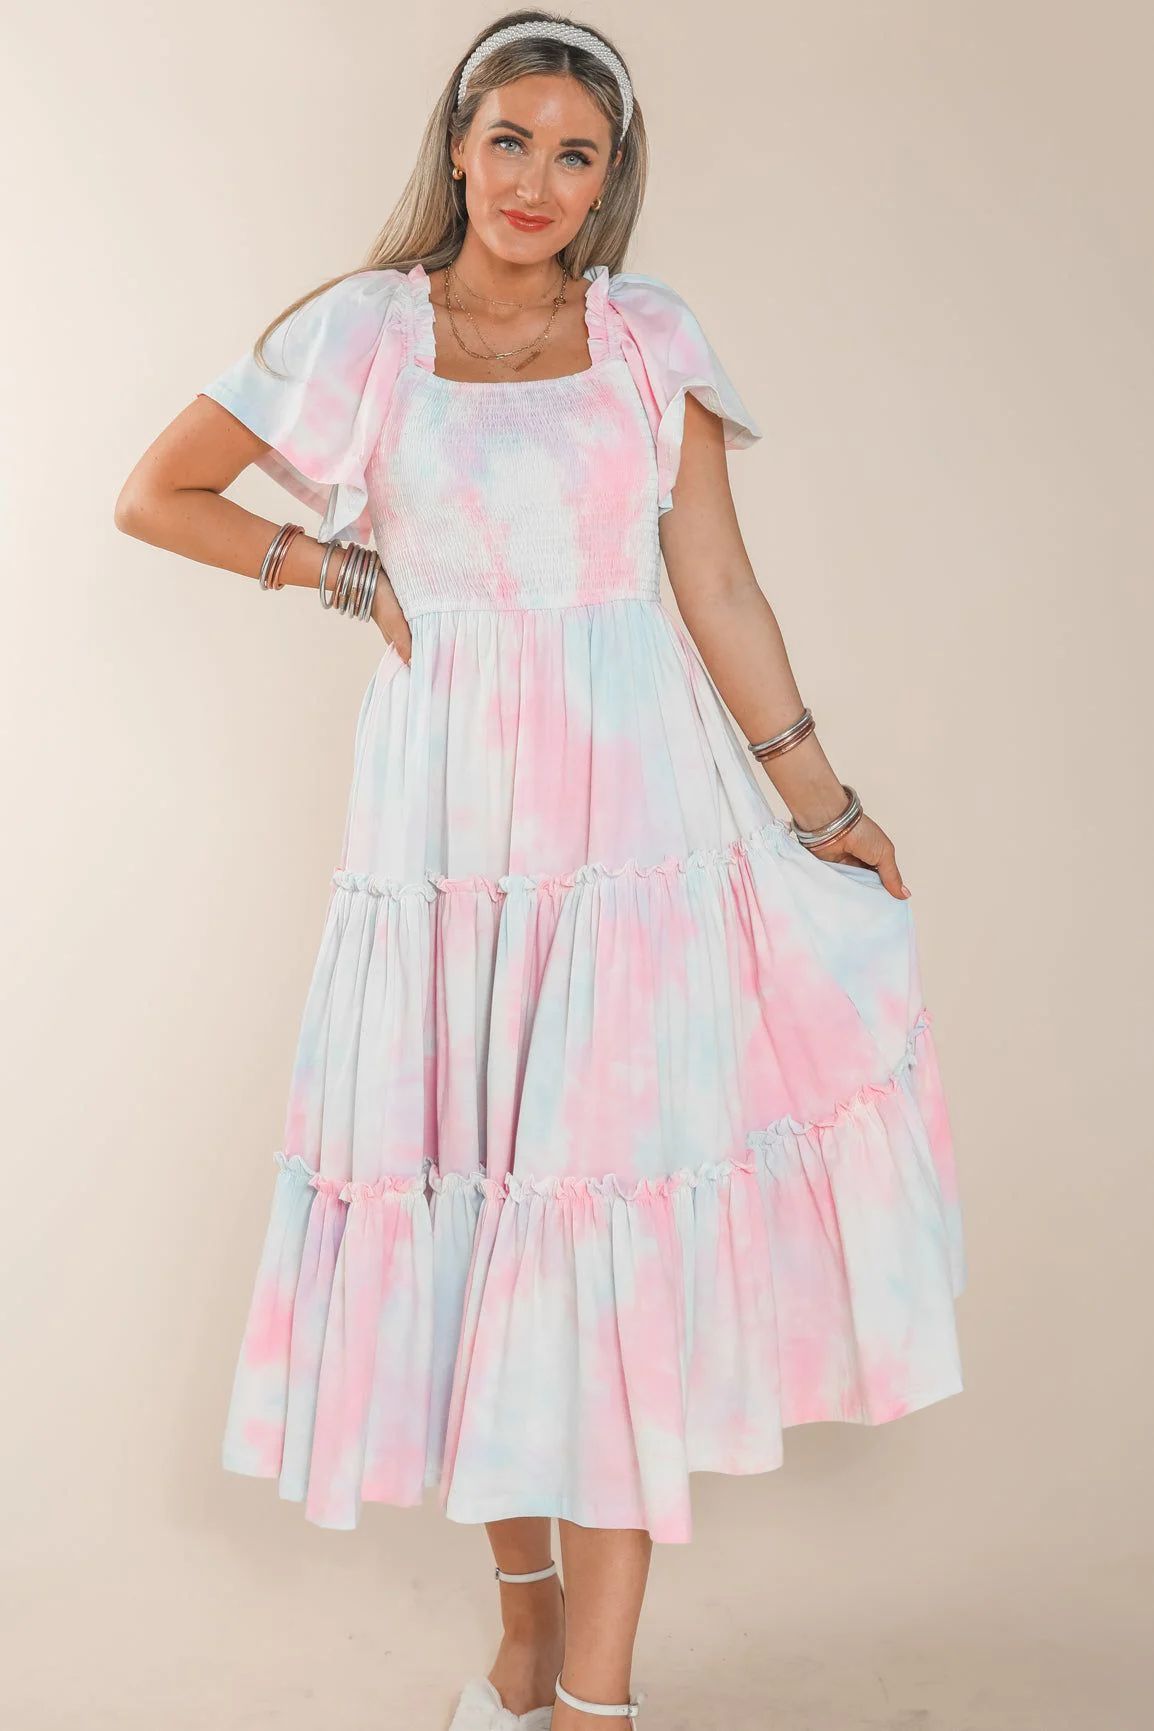 Cotton Candy Dress | Ivy City Co